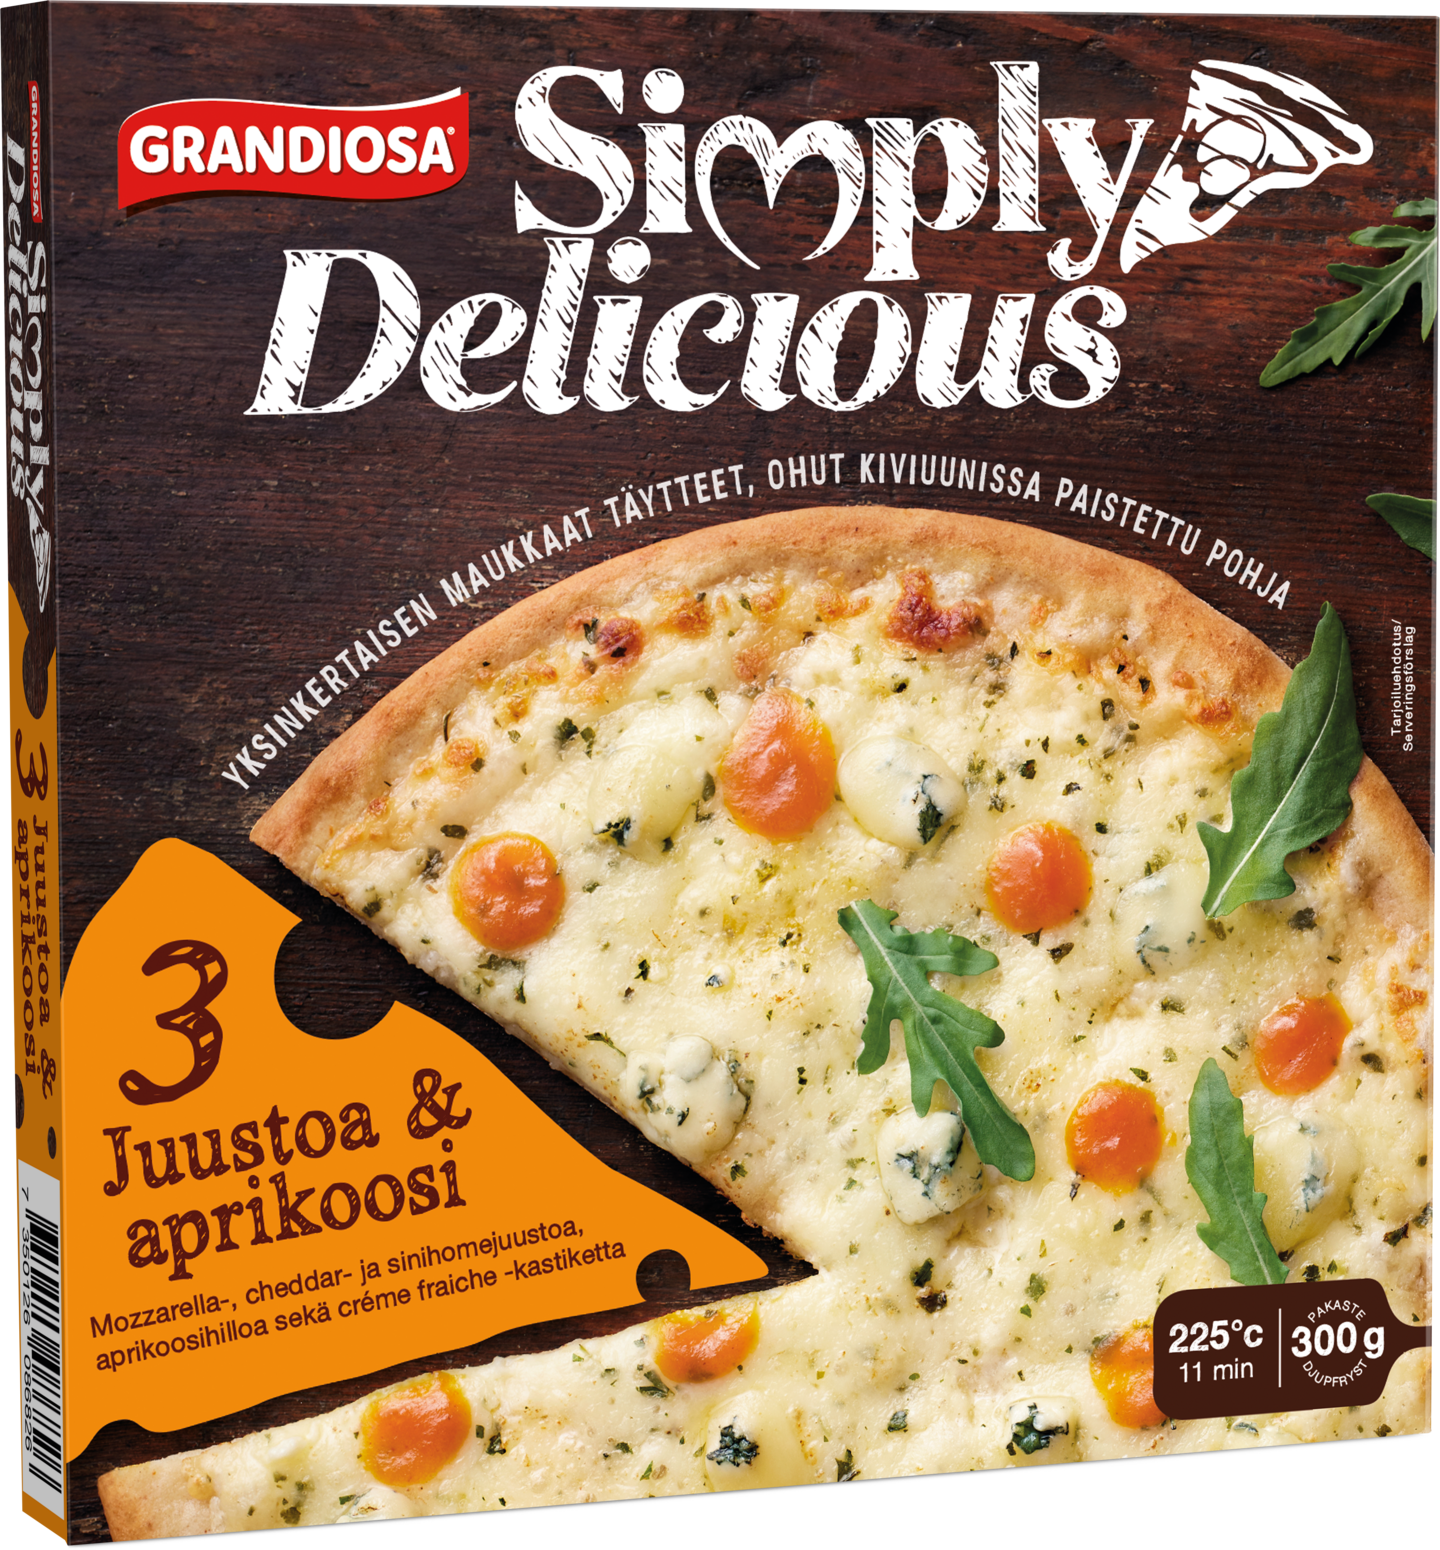 Grandiosa Simply Delicious kolme juustoa & aprikoosi pizza 300g pakaste